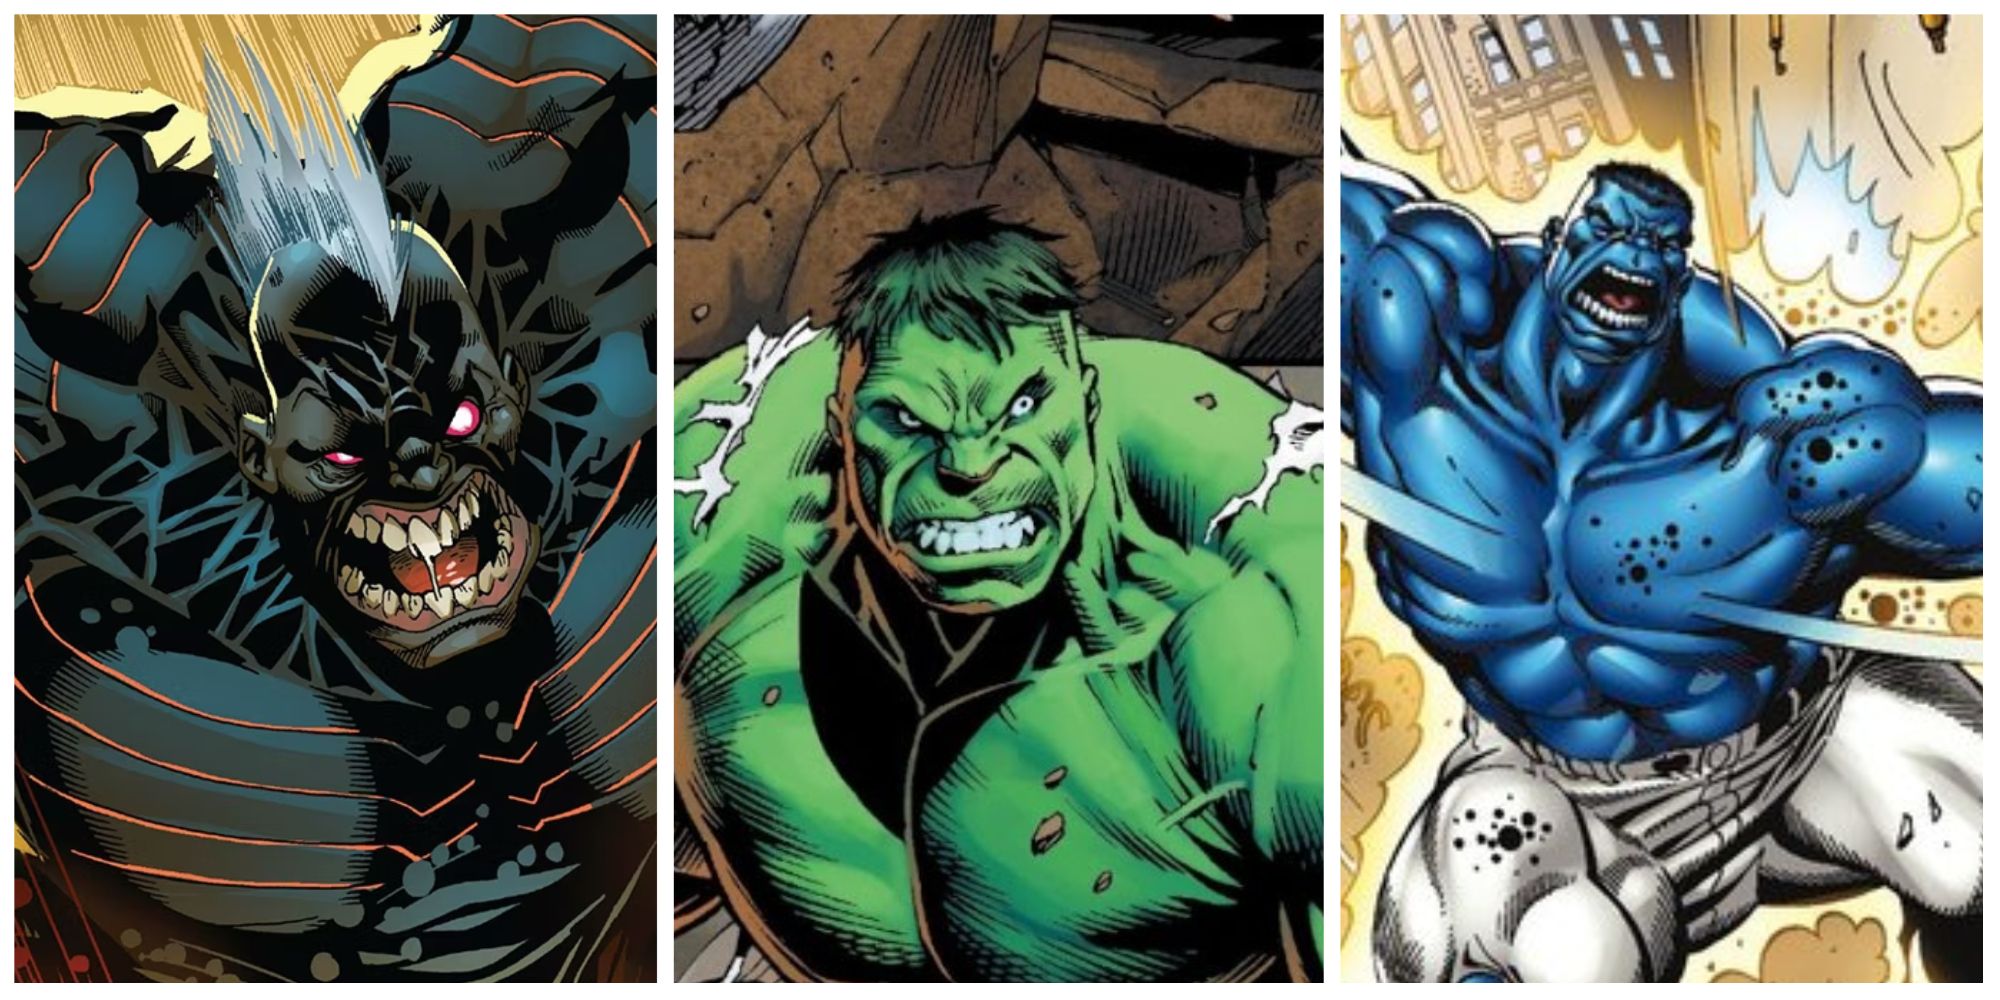 kluh, incredible hulk and cosmic hulk from marvel comics